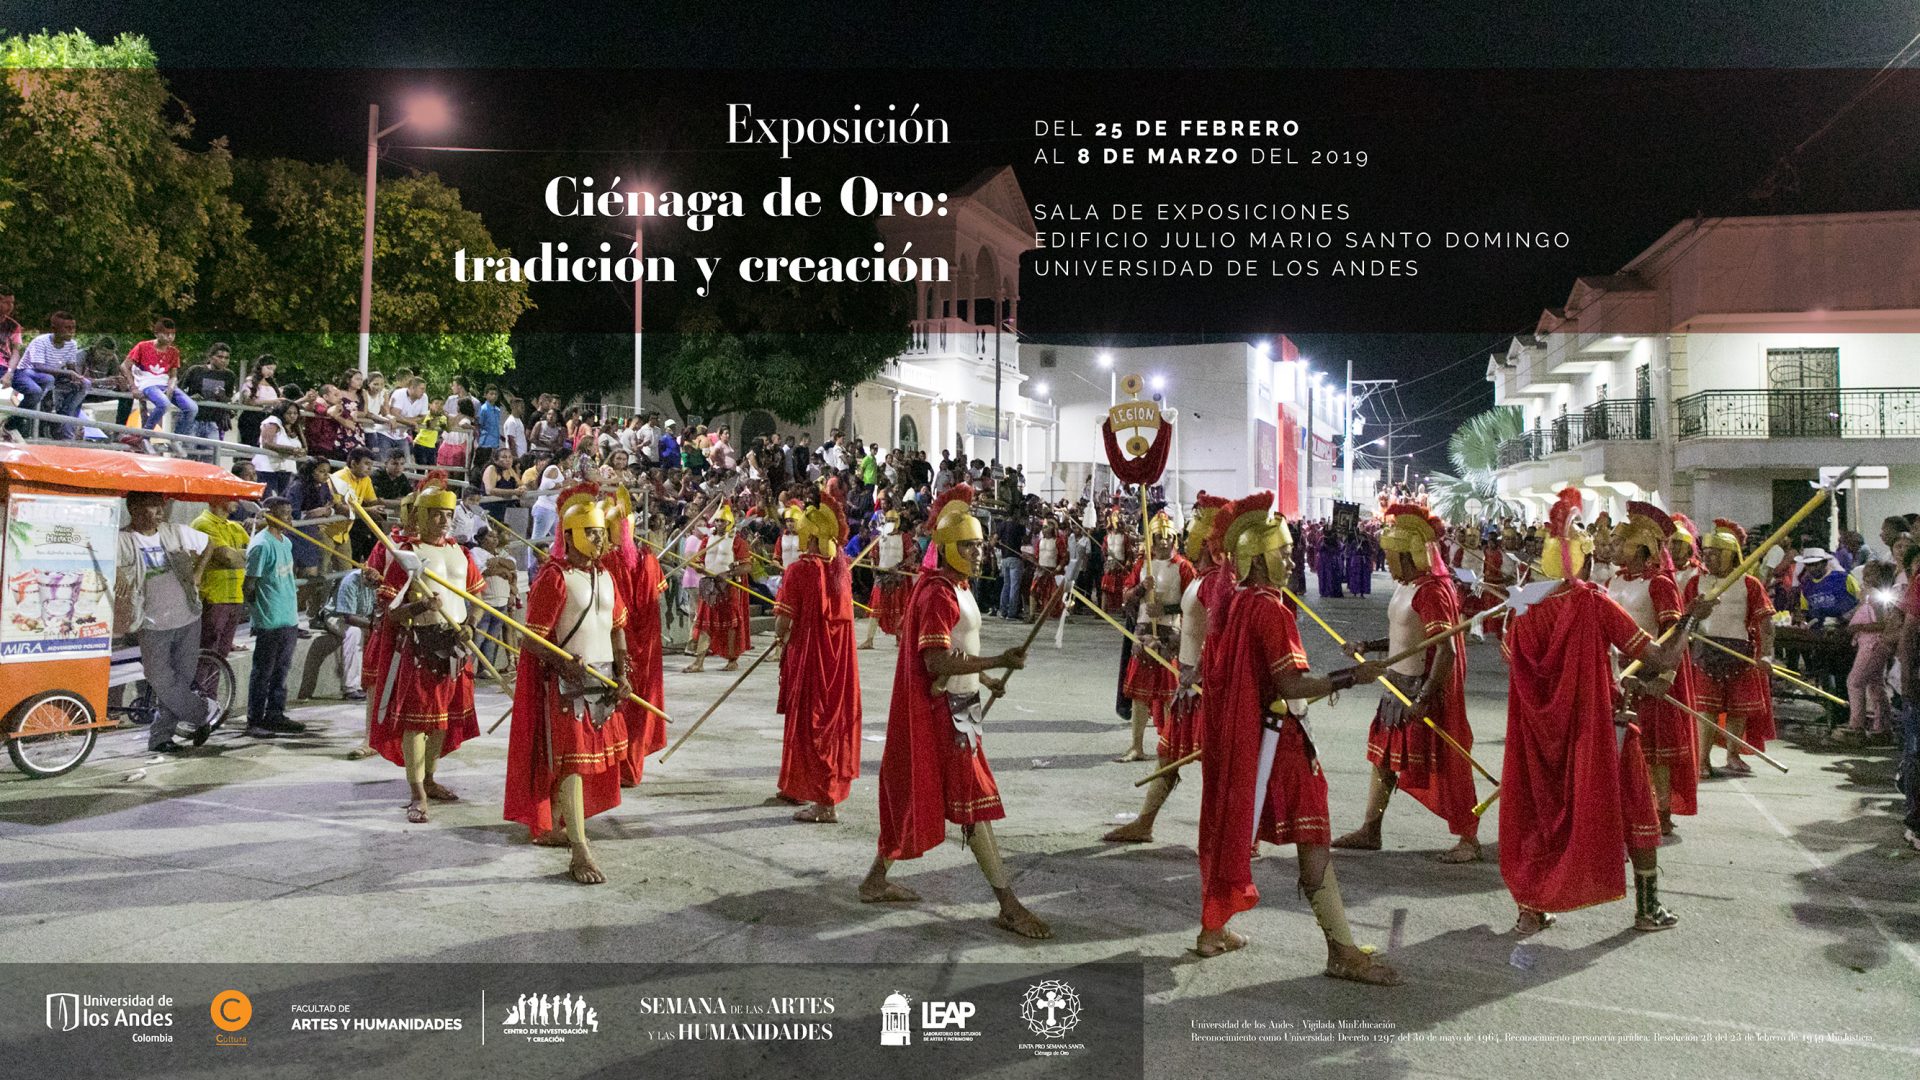 Inauguración Exposición - Ciénaga de Oro: creación y tradición